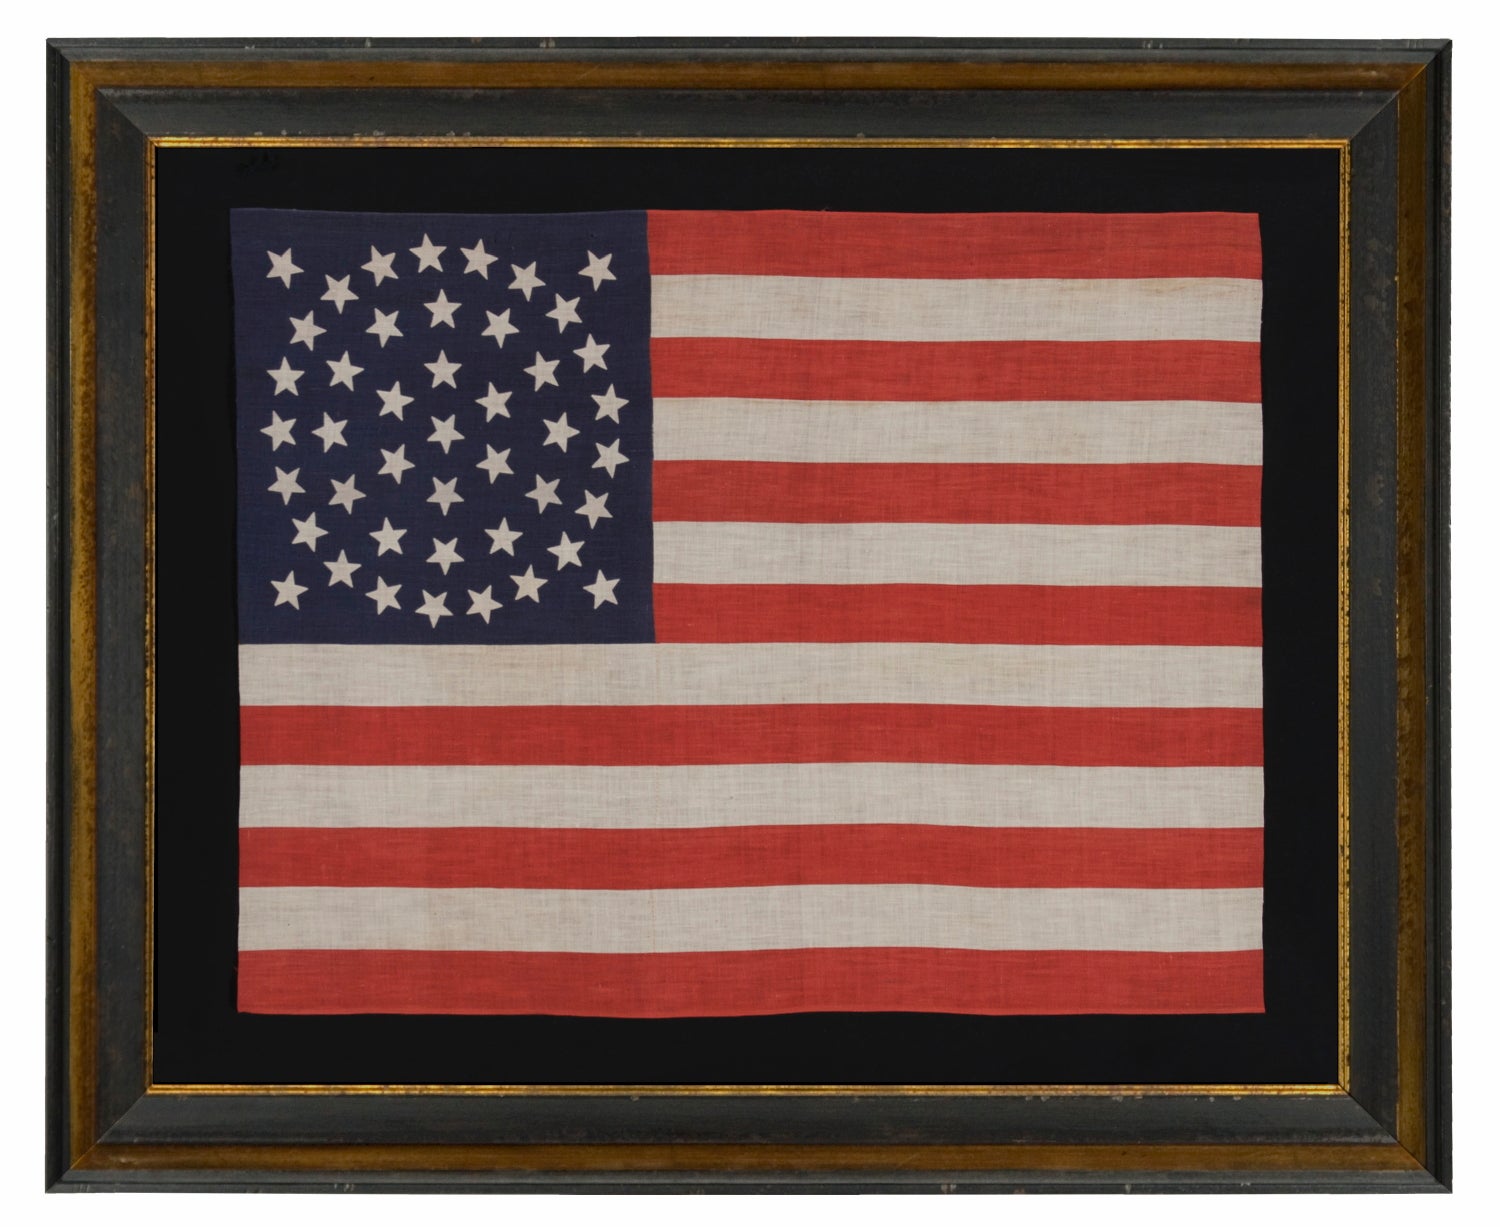 44 Star Antique American Flag, Medallion Pattern, Wyoming Statehood, 1890-96